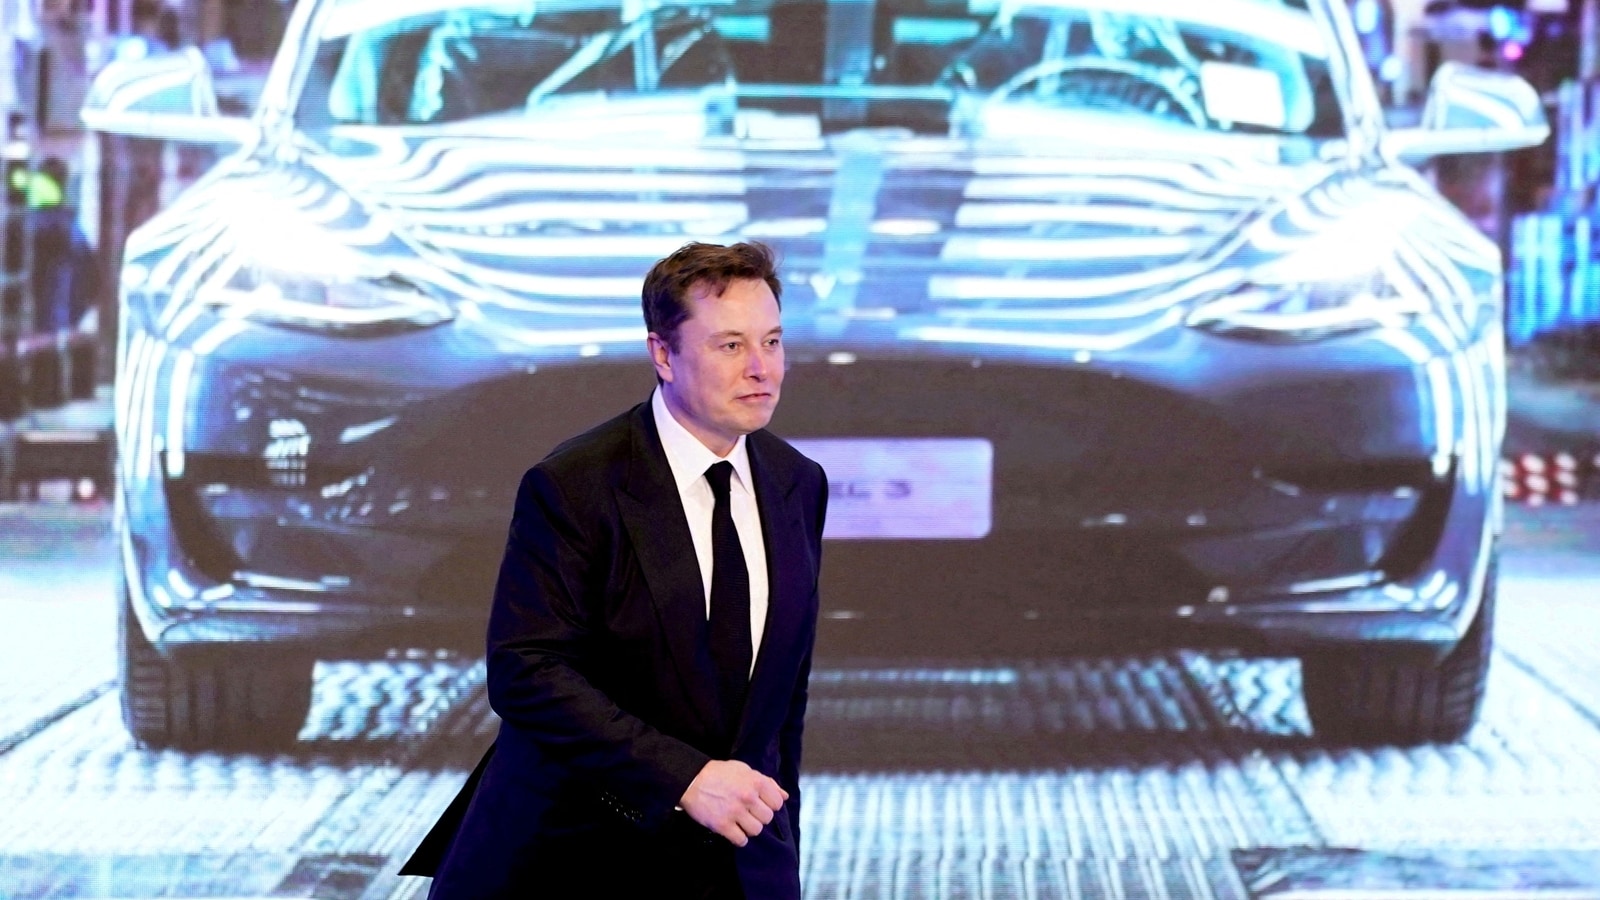 CEO Elon Musk says new Tesla plants are ‘money furnaces’ losing billions